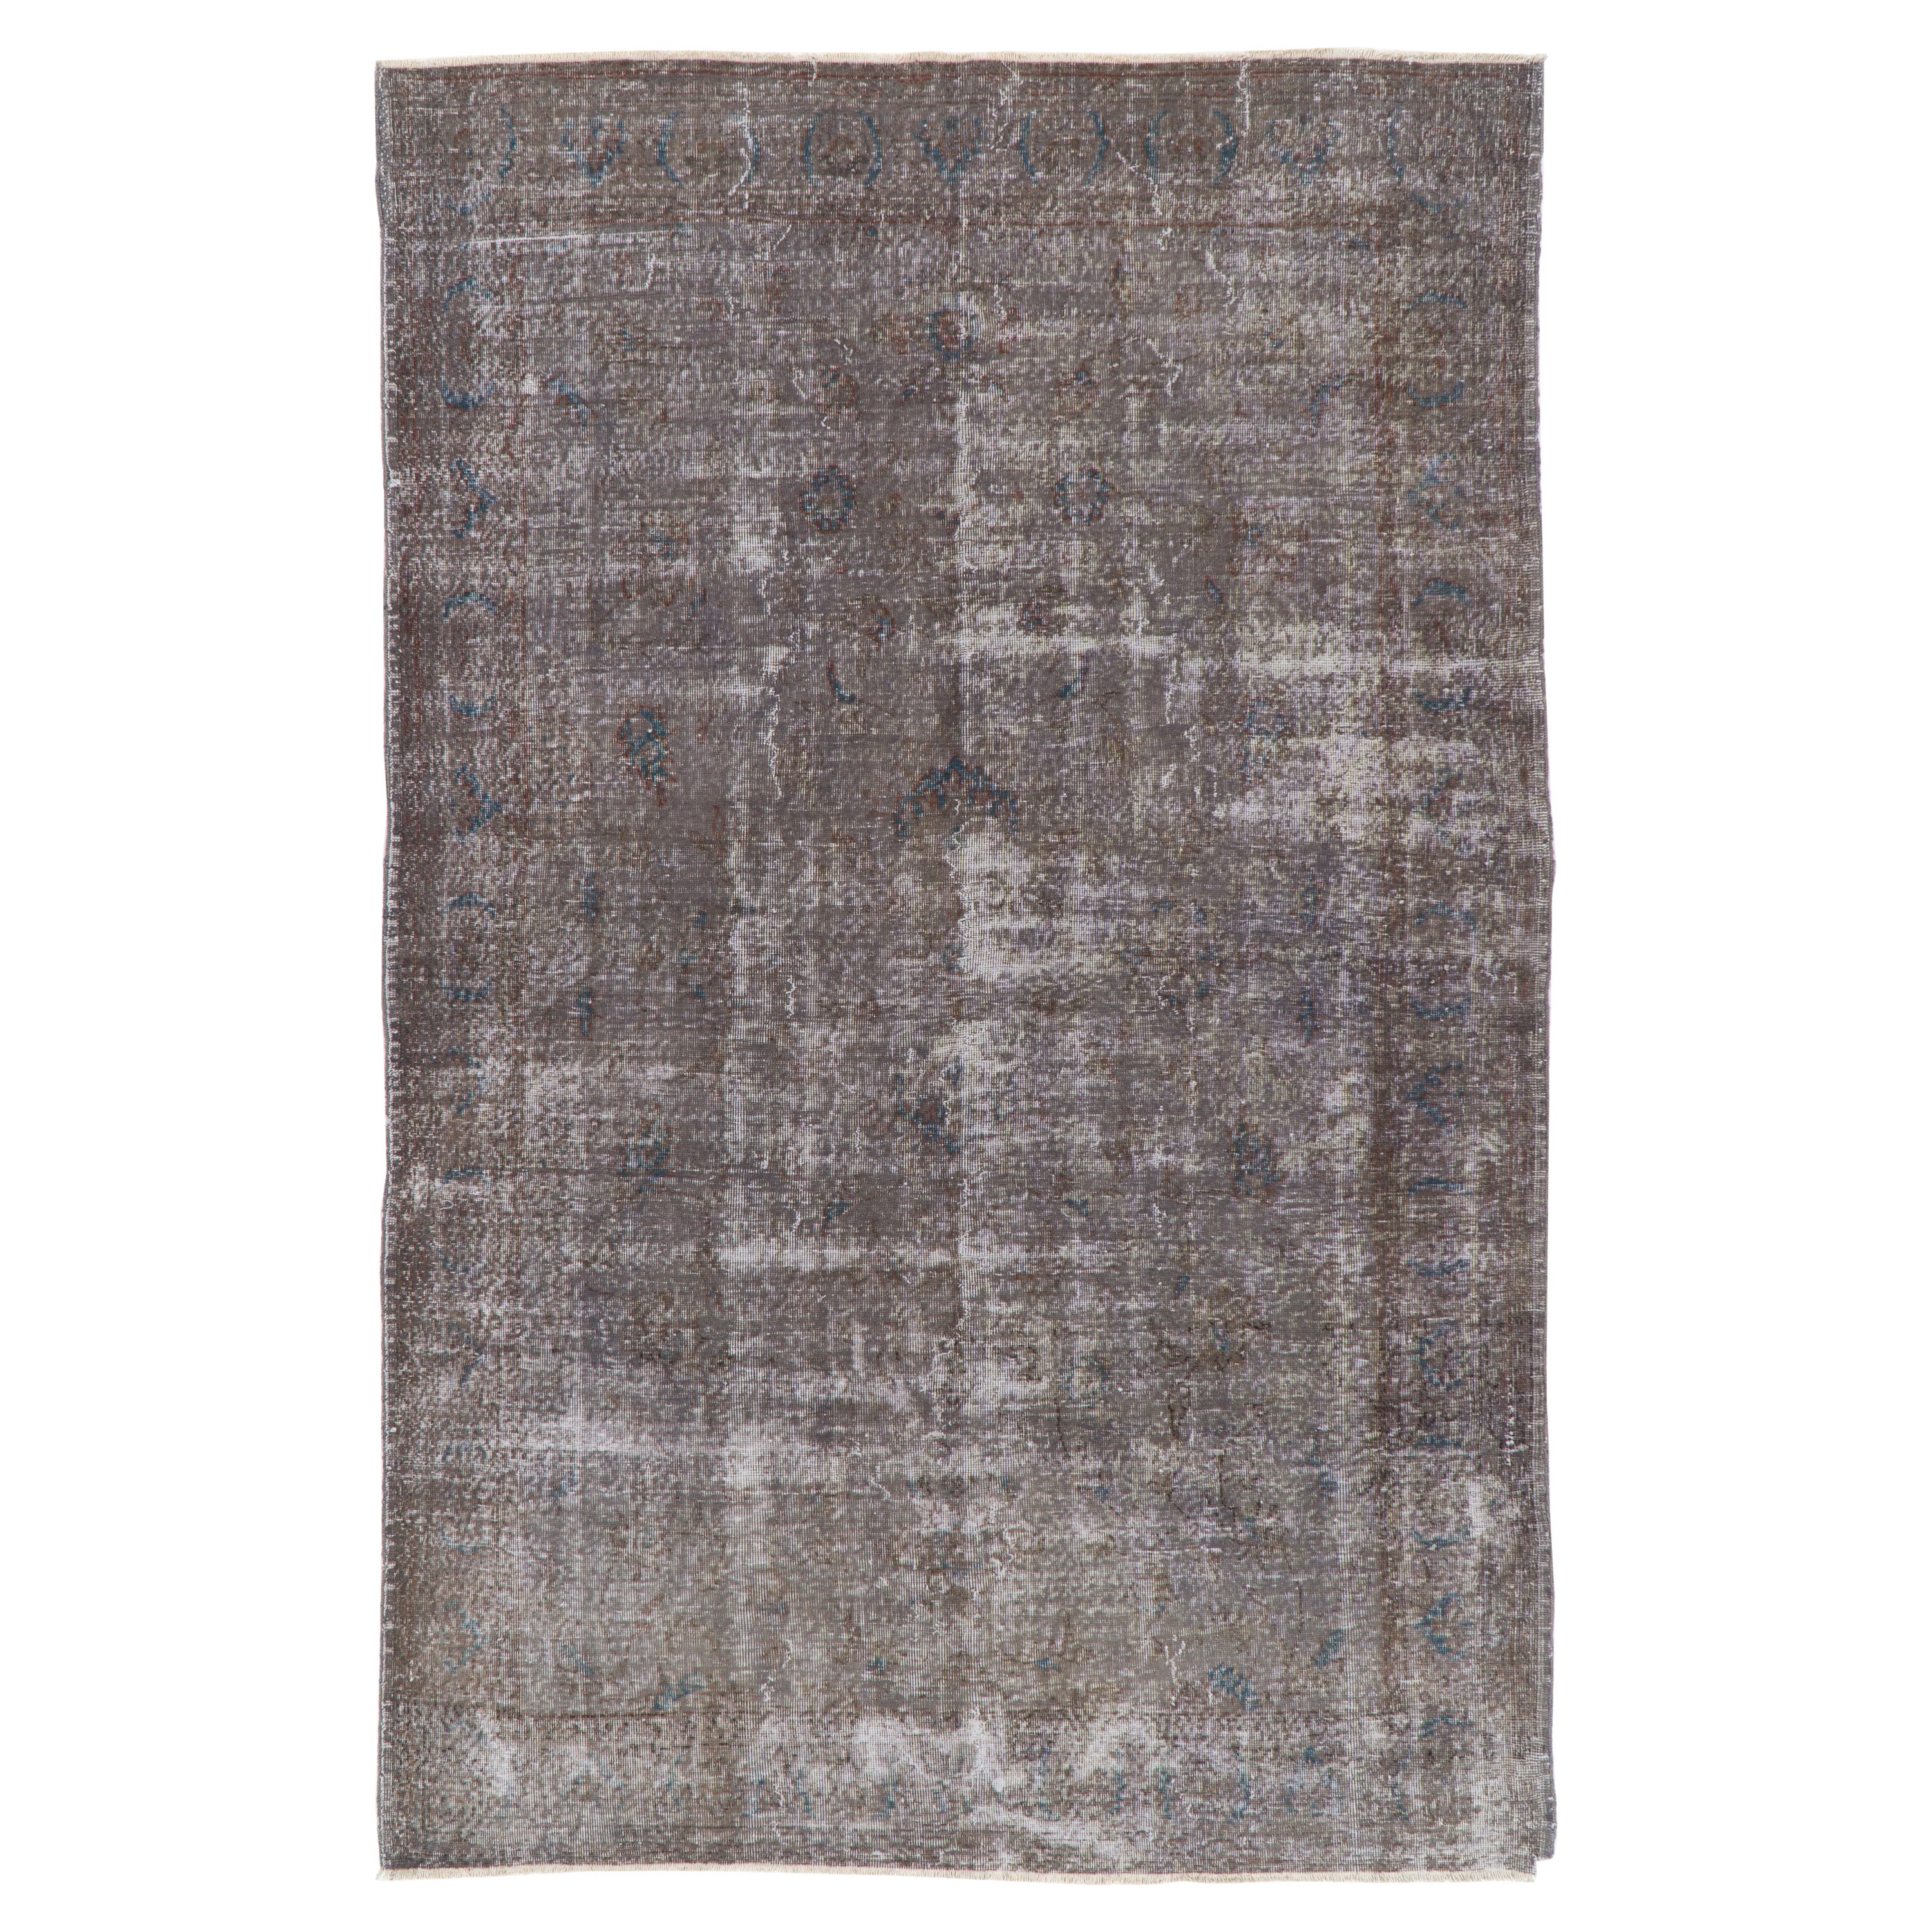 6.4x10 Ft Distressed 1950s Turkish Wool Area Rug. Handmade Taupe Grey Carpet